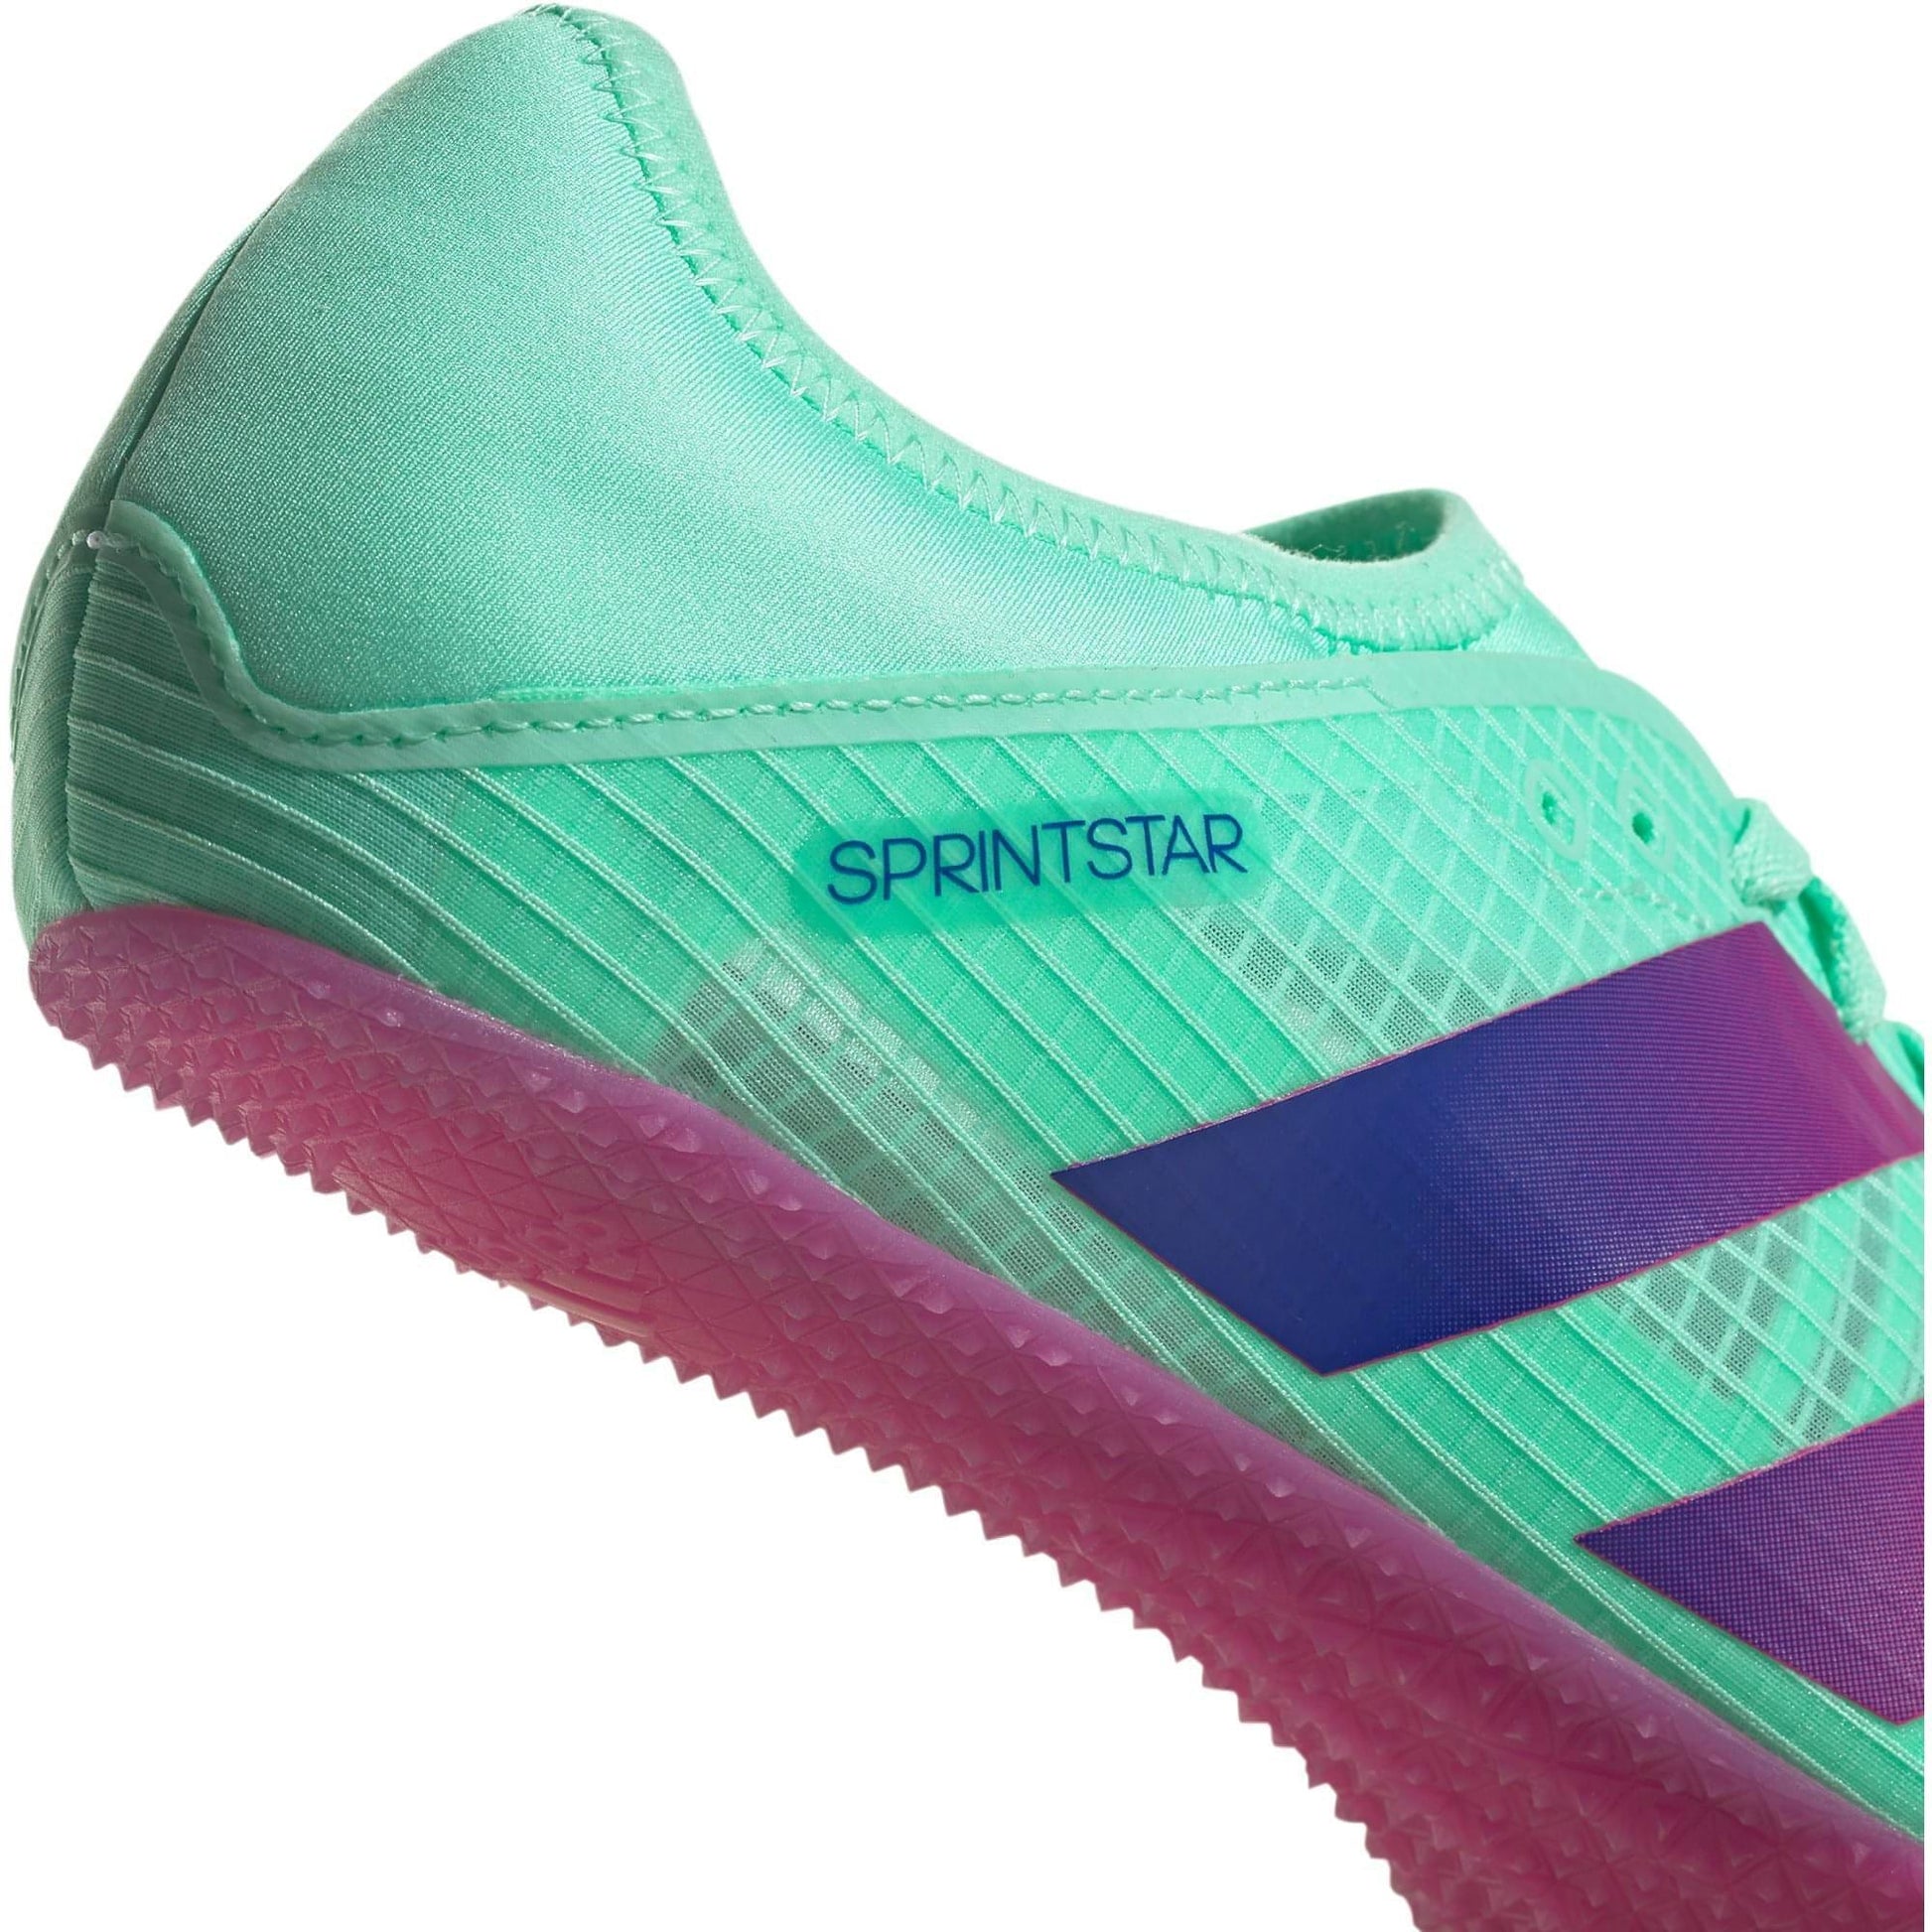 Adidas Sprintstar Gv9067 Details